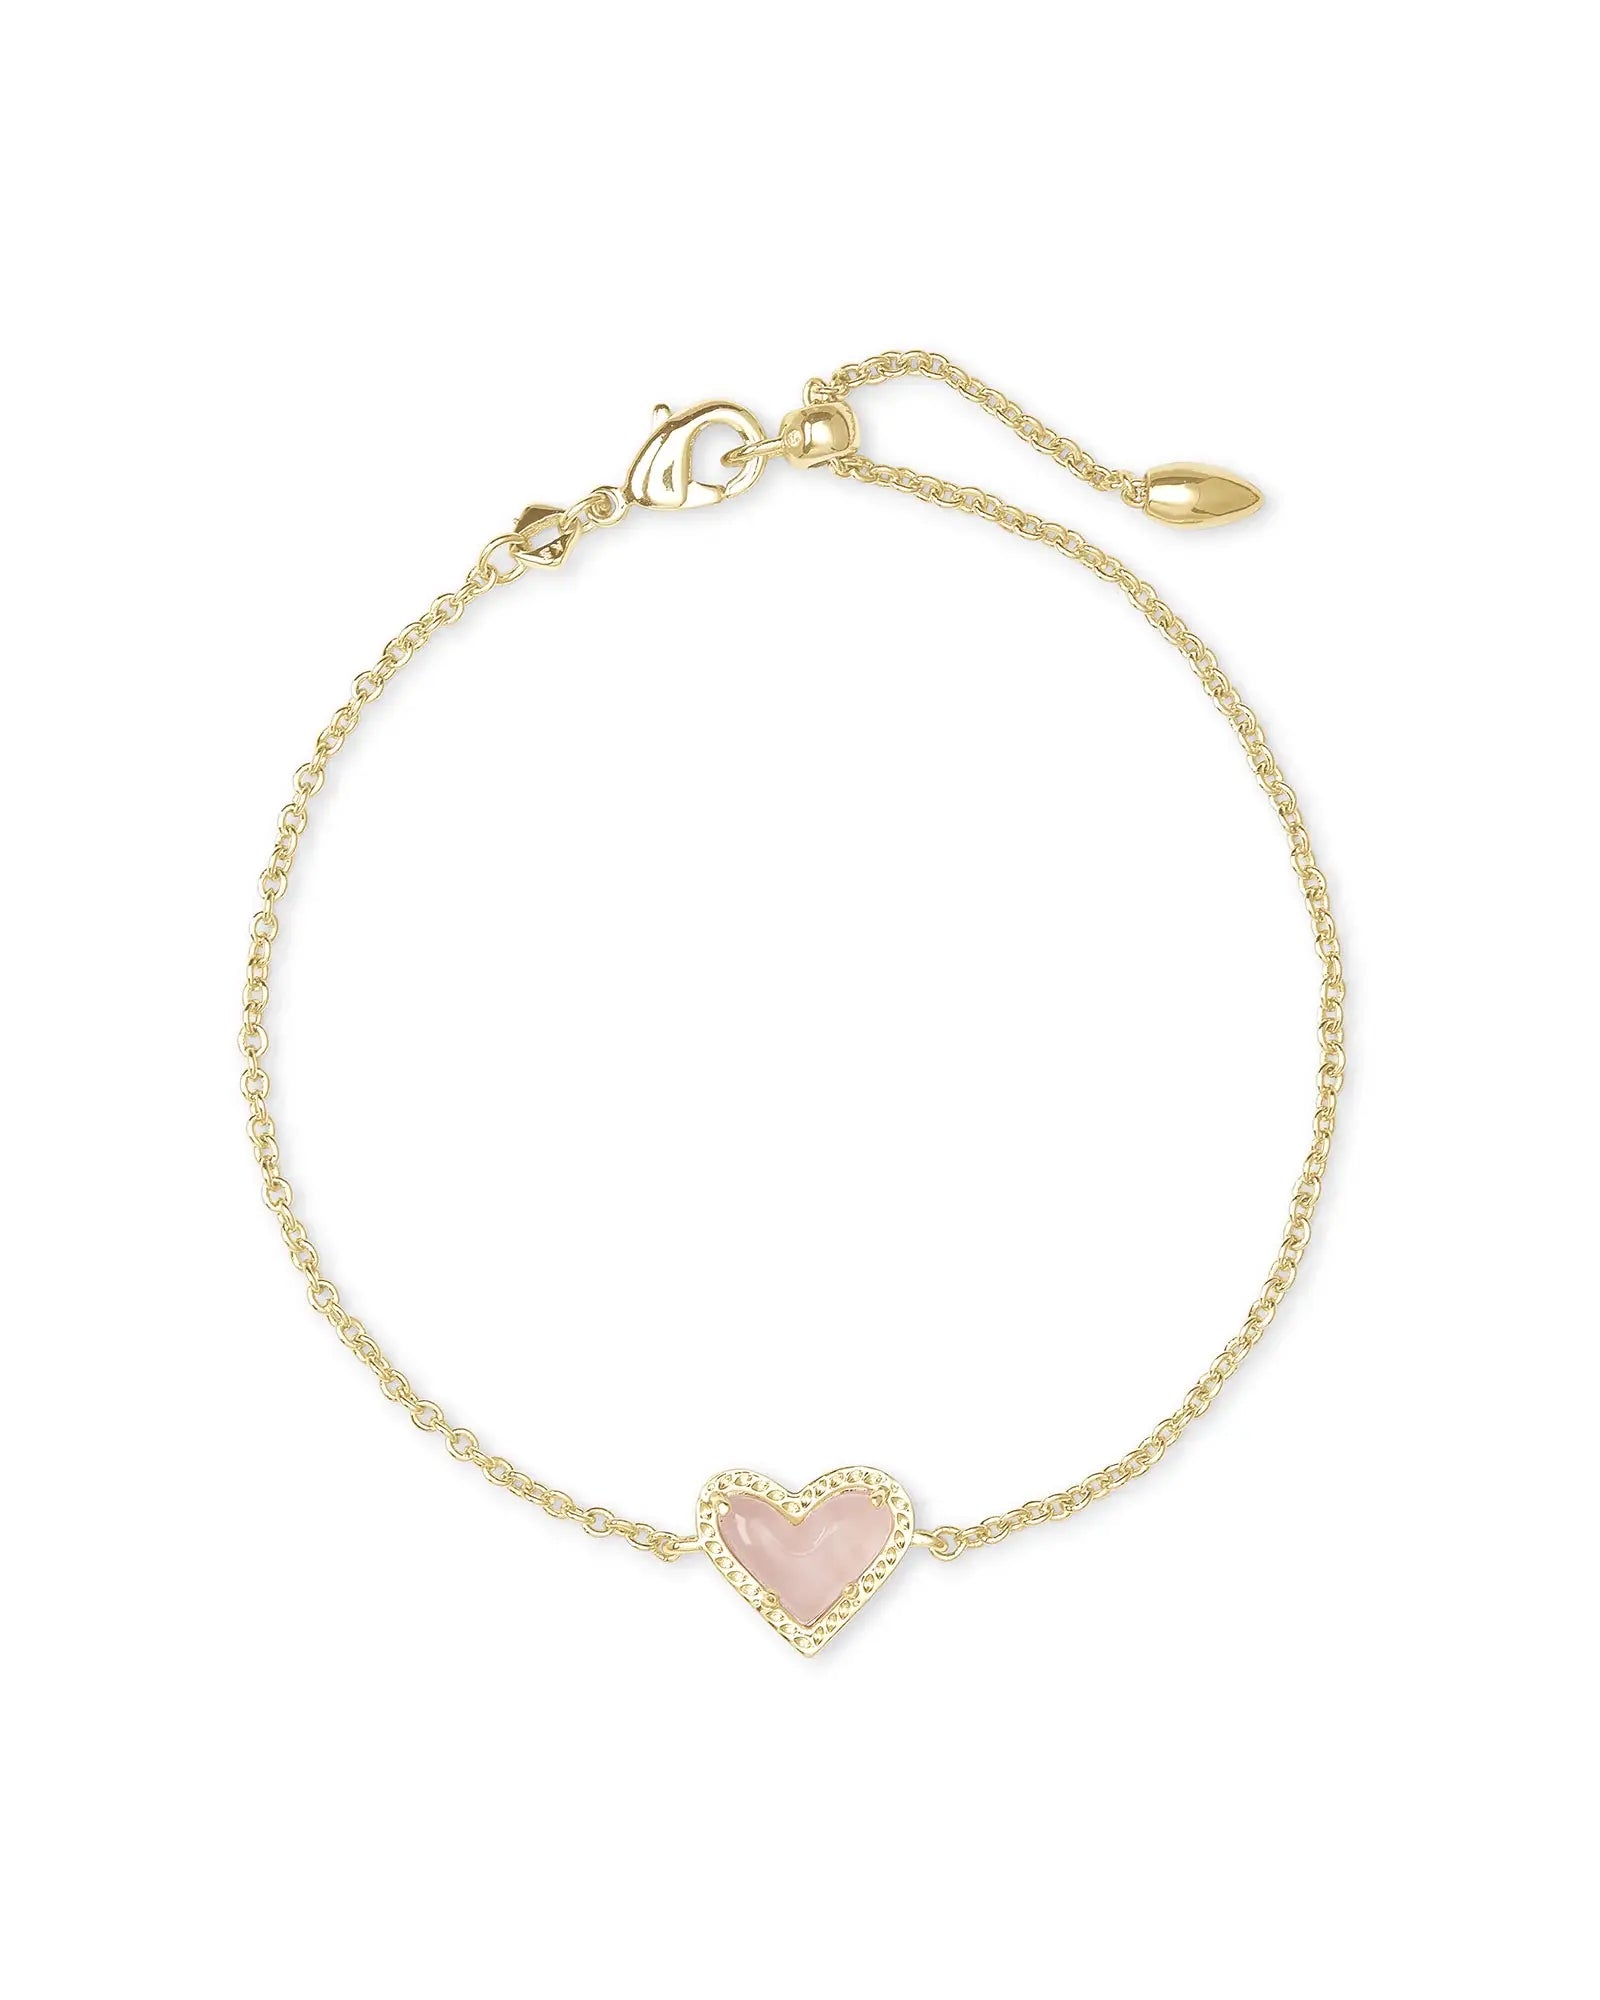 Ari Heart Delicate Chain Bracelet - Front View